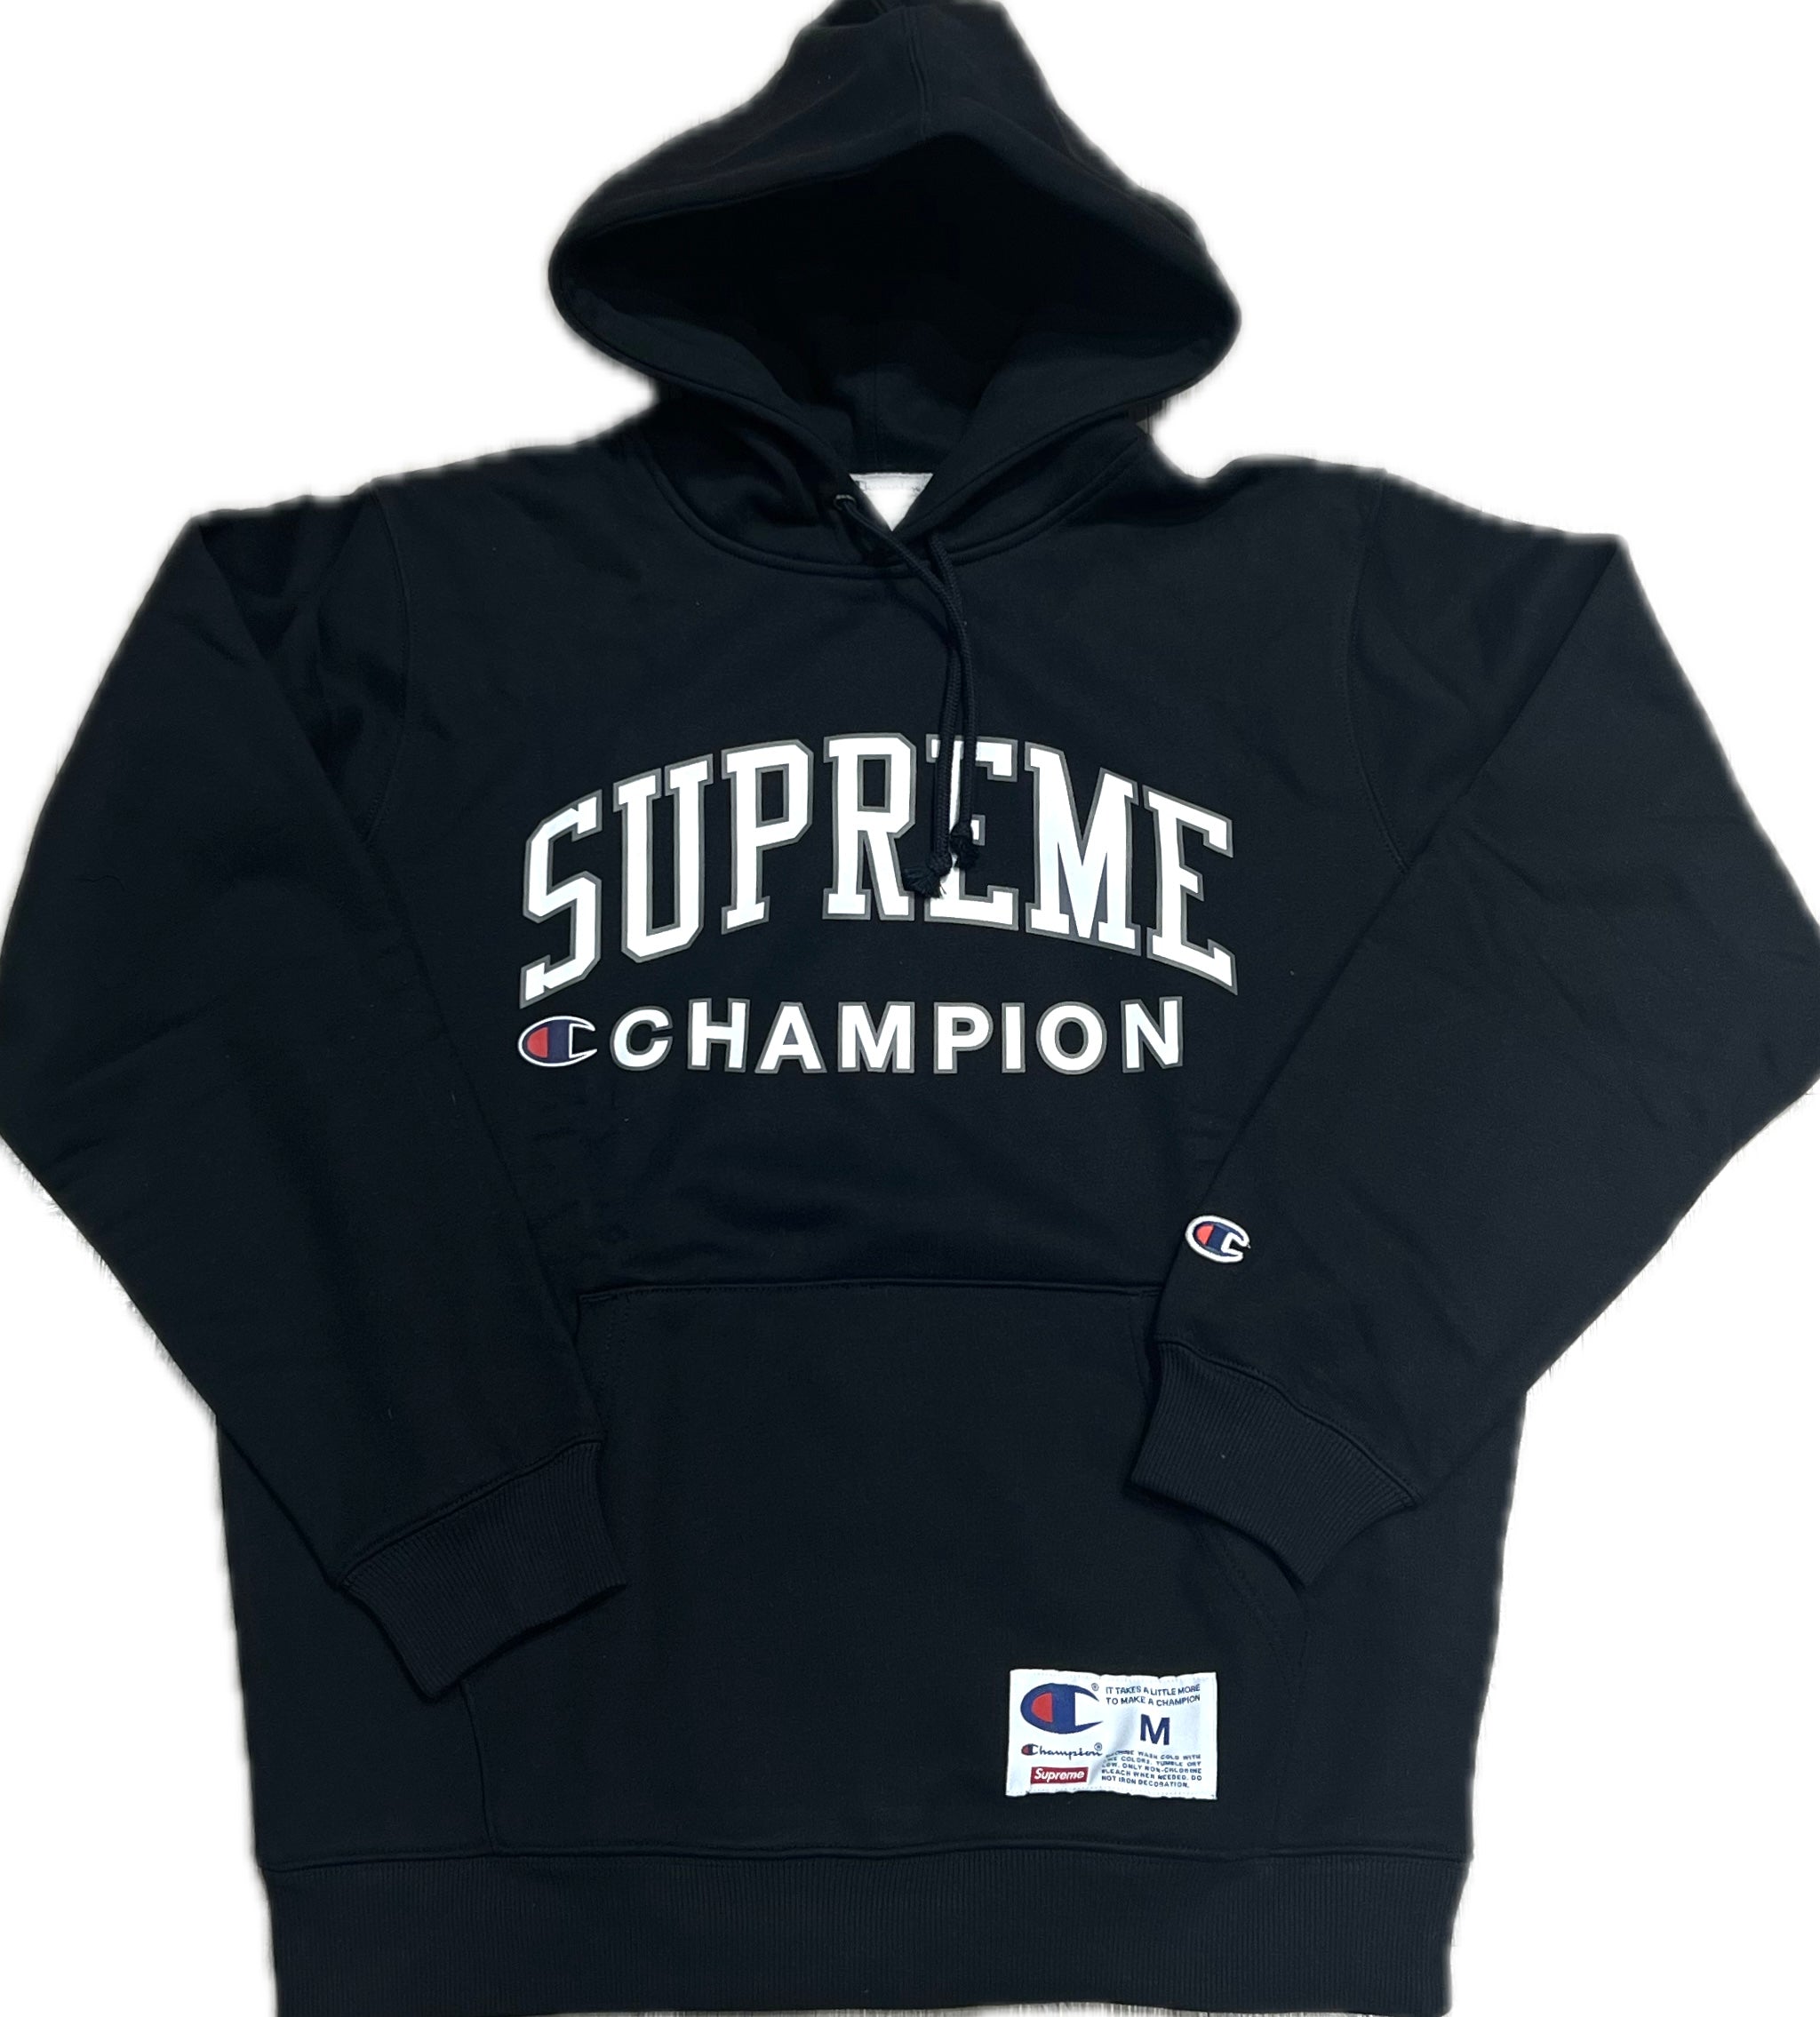 Supreme X Champion Hooded Sweatshirt Black